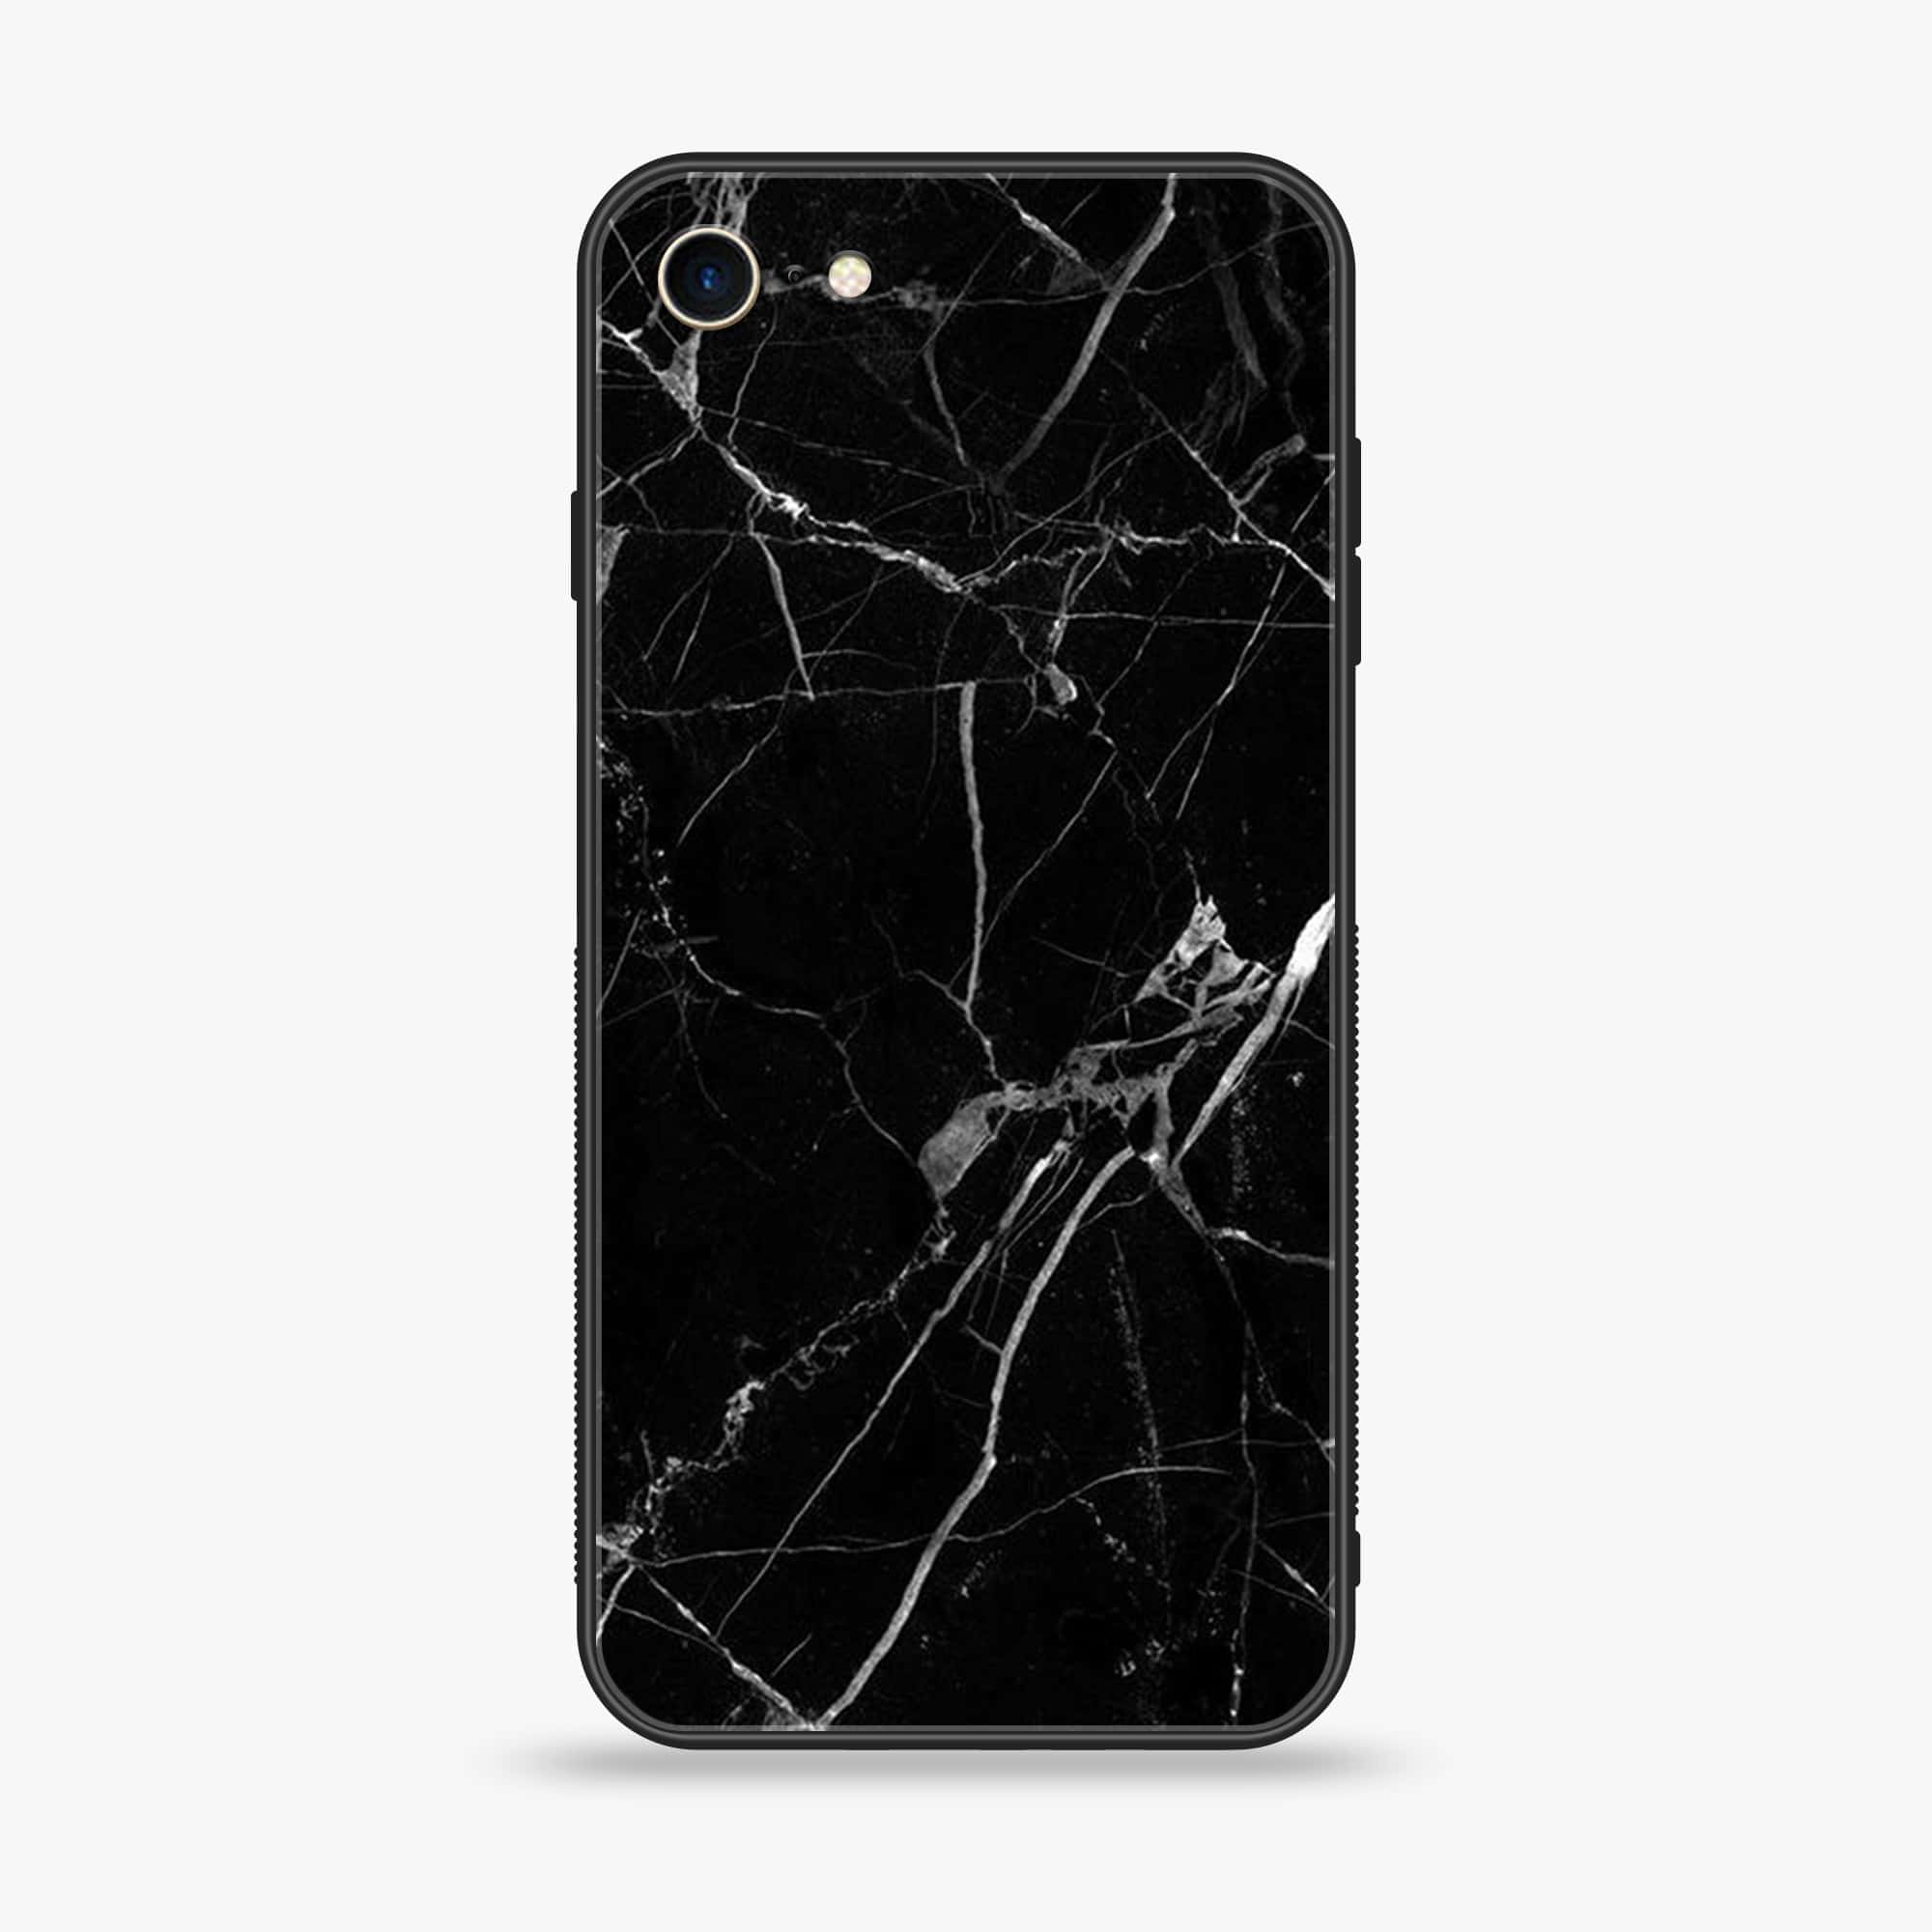 iPhone 6 - Black Marble Series - Premium Printed Glass soft Bumper shock Proof Case